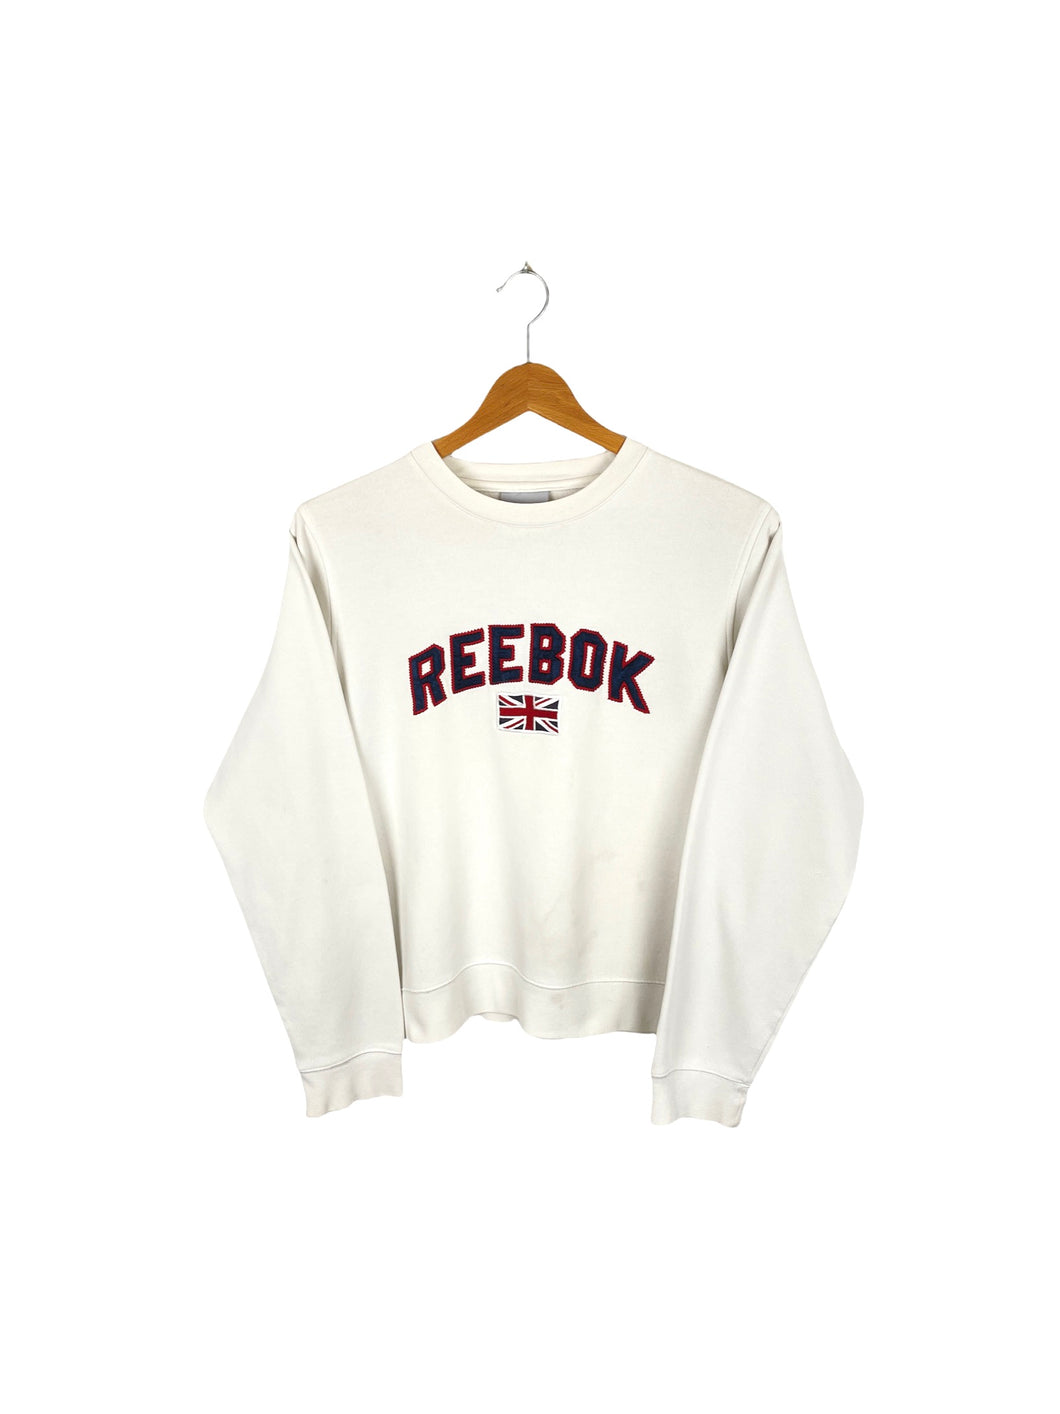 Reebok Sweatshirt - Small